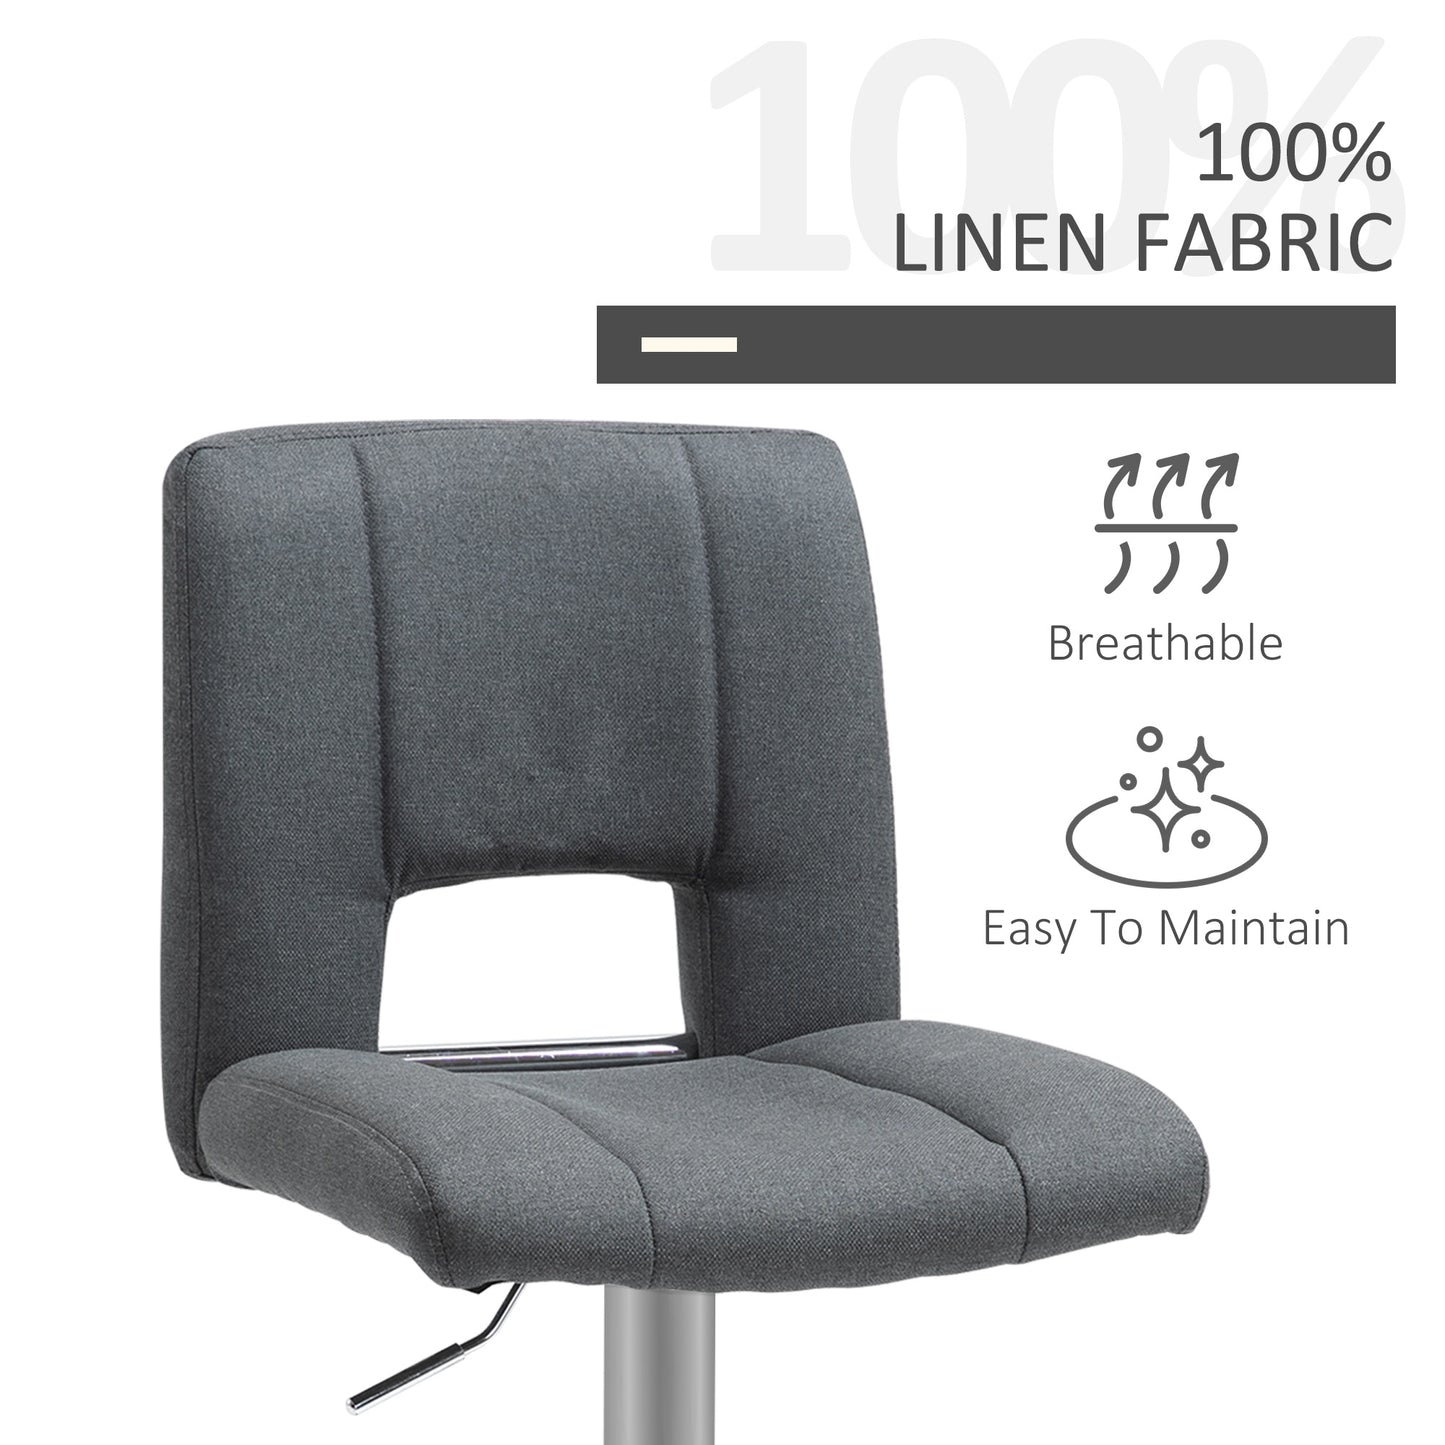 HOMCOM Modern Fabric Bar stool Armless Adjustable Height with Swivel Seat, Set of 2